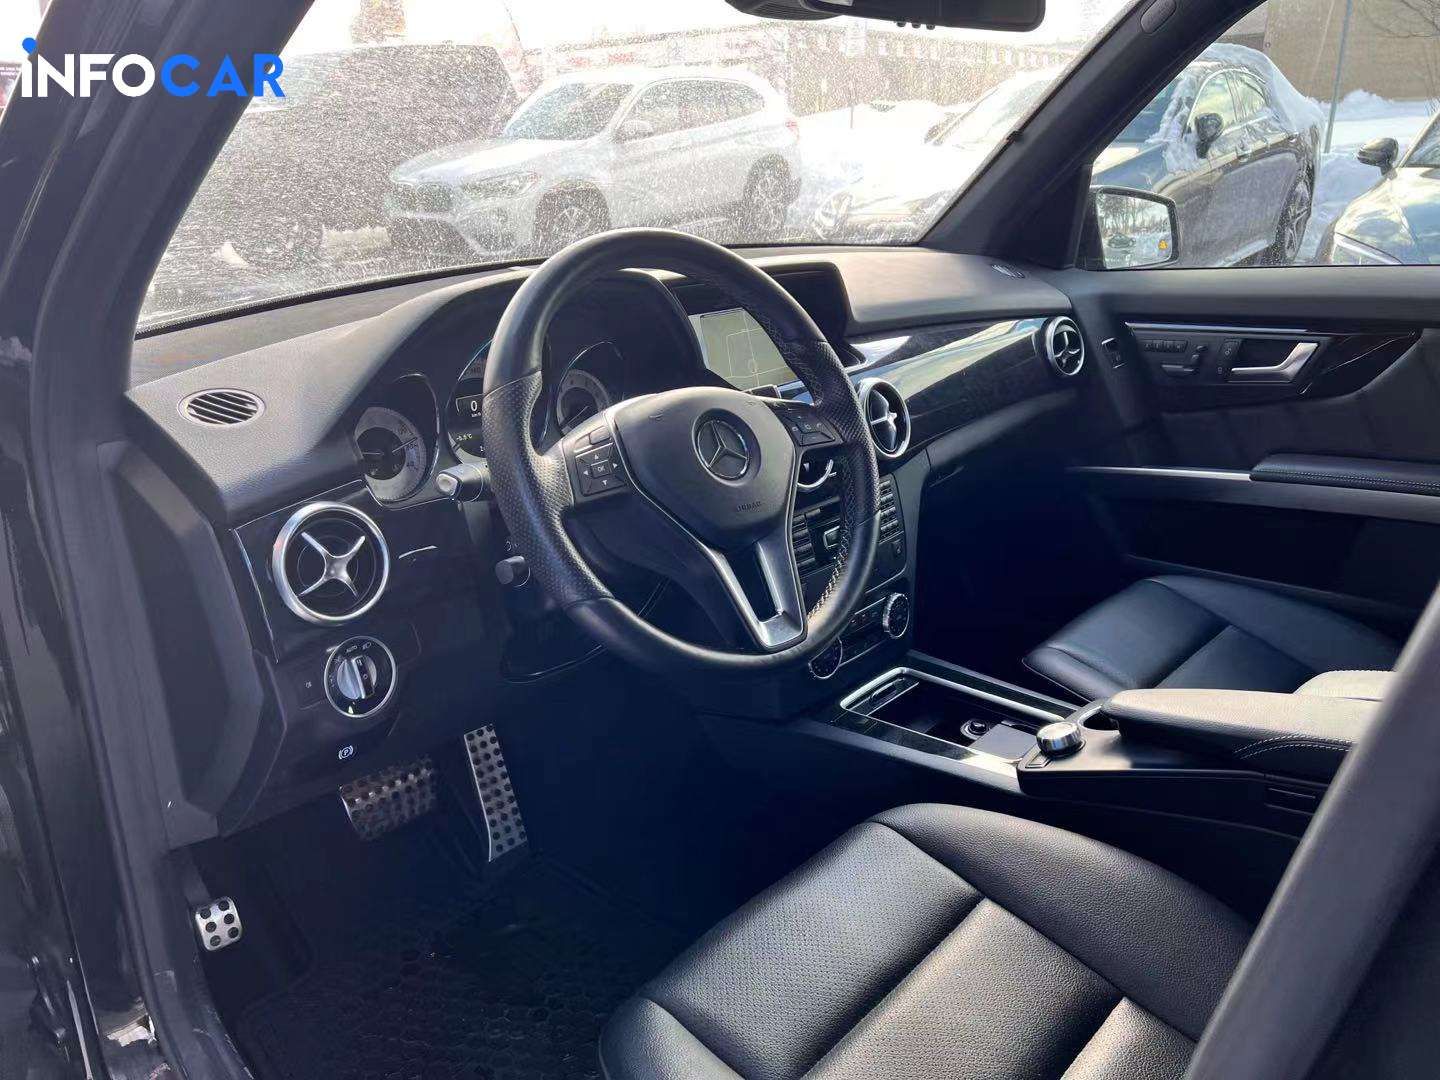 2015 Mercedes-Benz GLK-Class 350 - INFOCAR - Toronto Auto Trading Platform